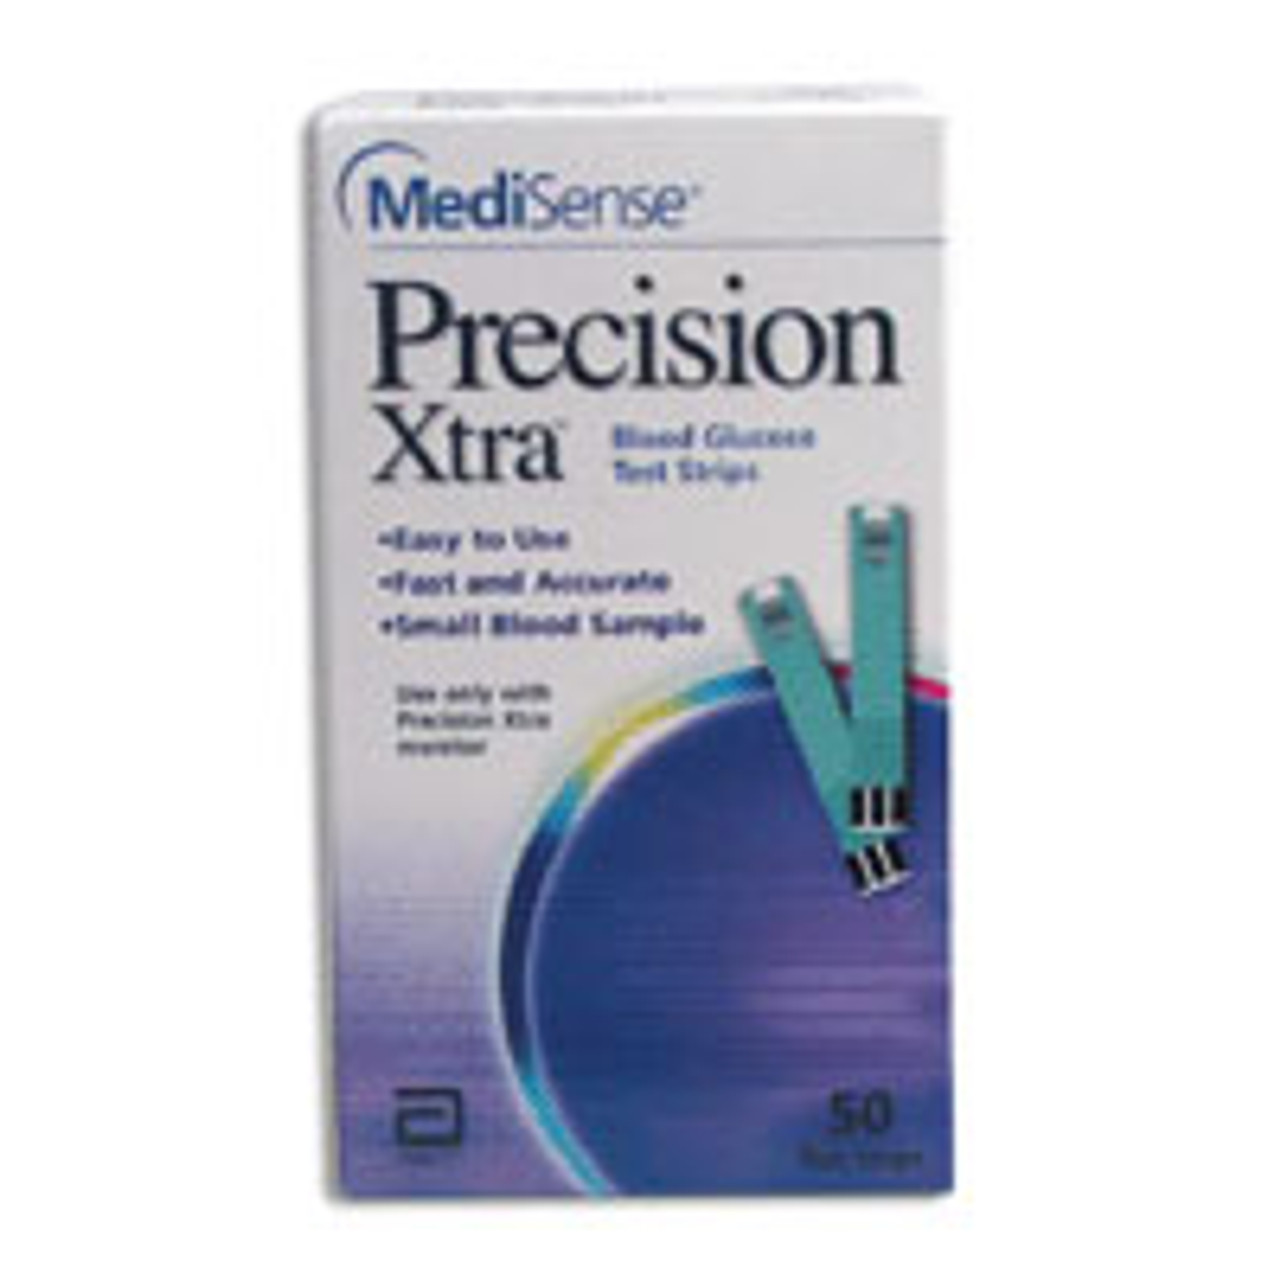 Medisense Precision Xtra Blood Glucose Test Strips 50 Ea